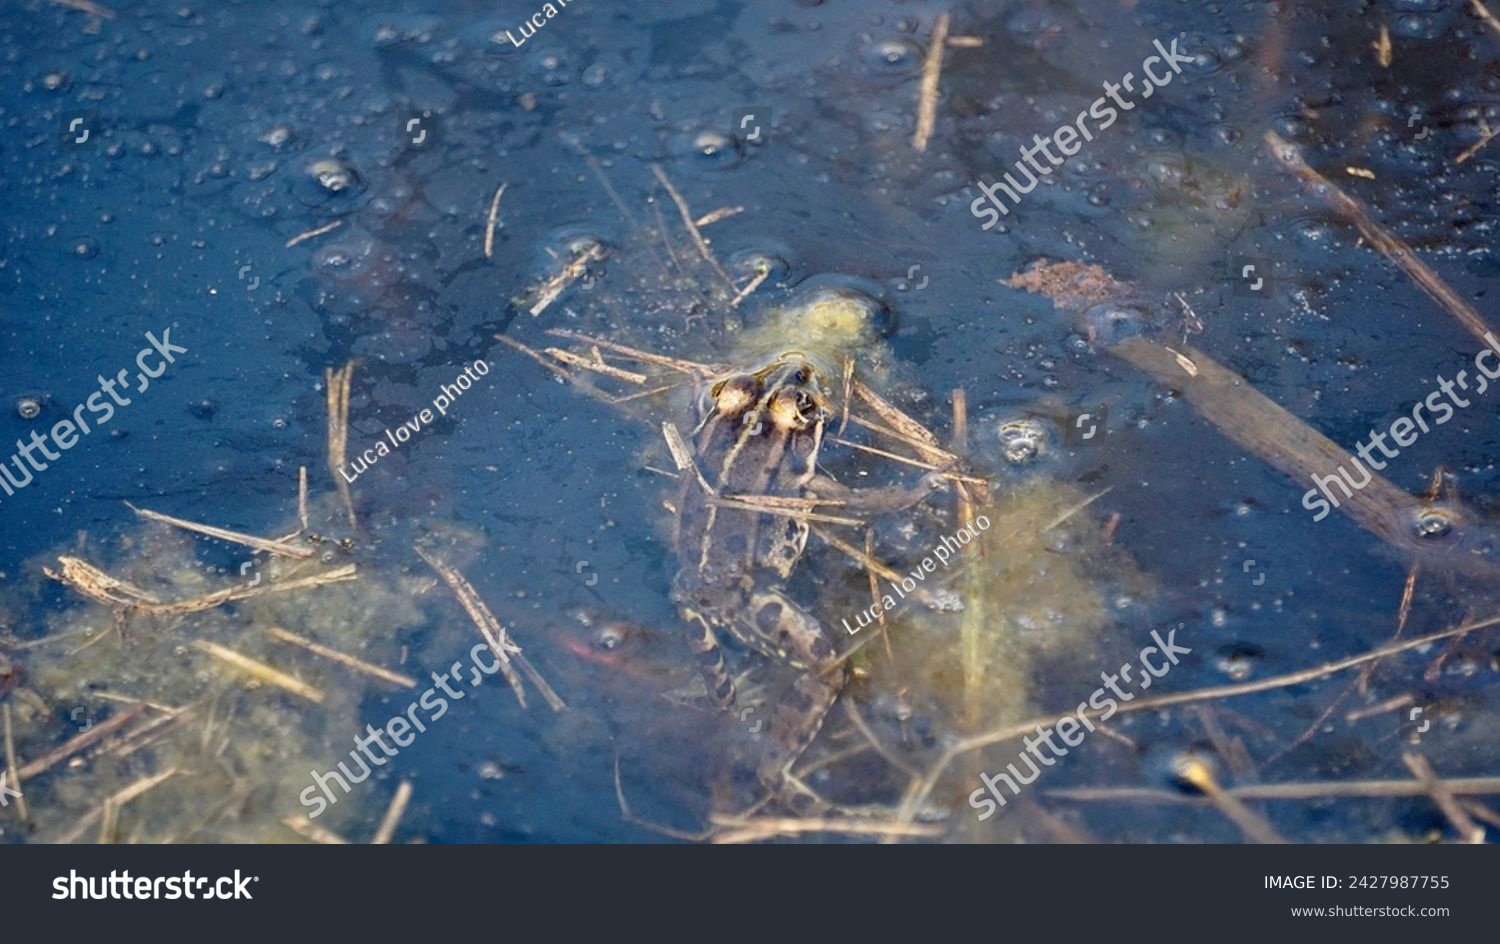 Ecology and behavior of Pelophylax ridibundus: The Marsh frog, at the pond. Winter season      #2427987755